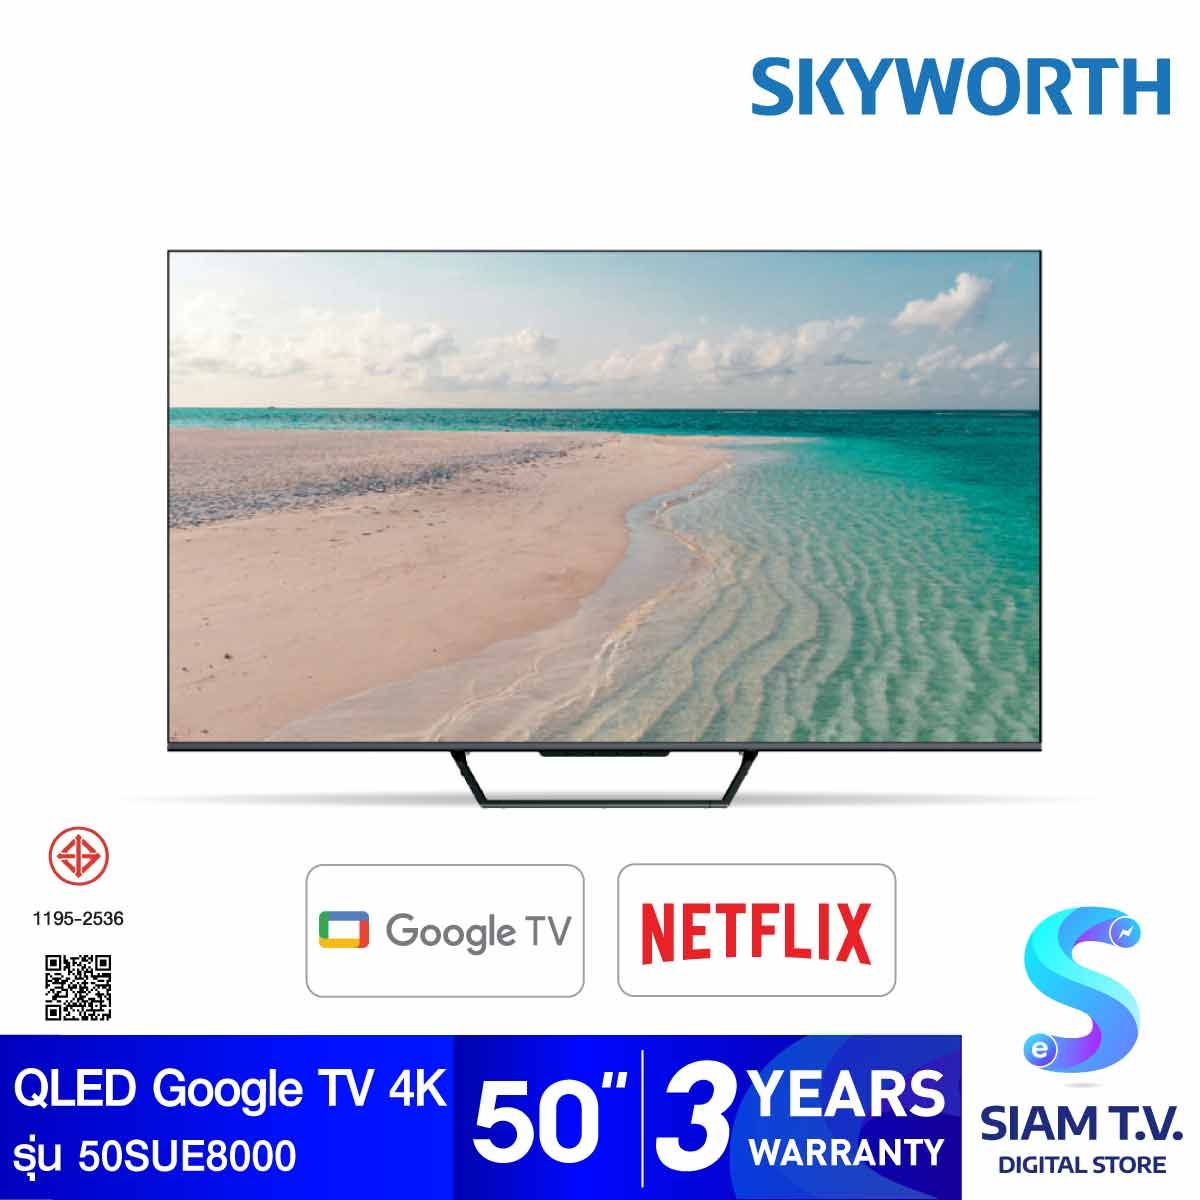 SKYWORTH QLED Google TV 4K รุ่น 50SUE8000 Google TV ขนาด 50 นิ้ว